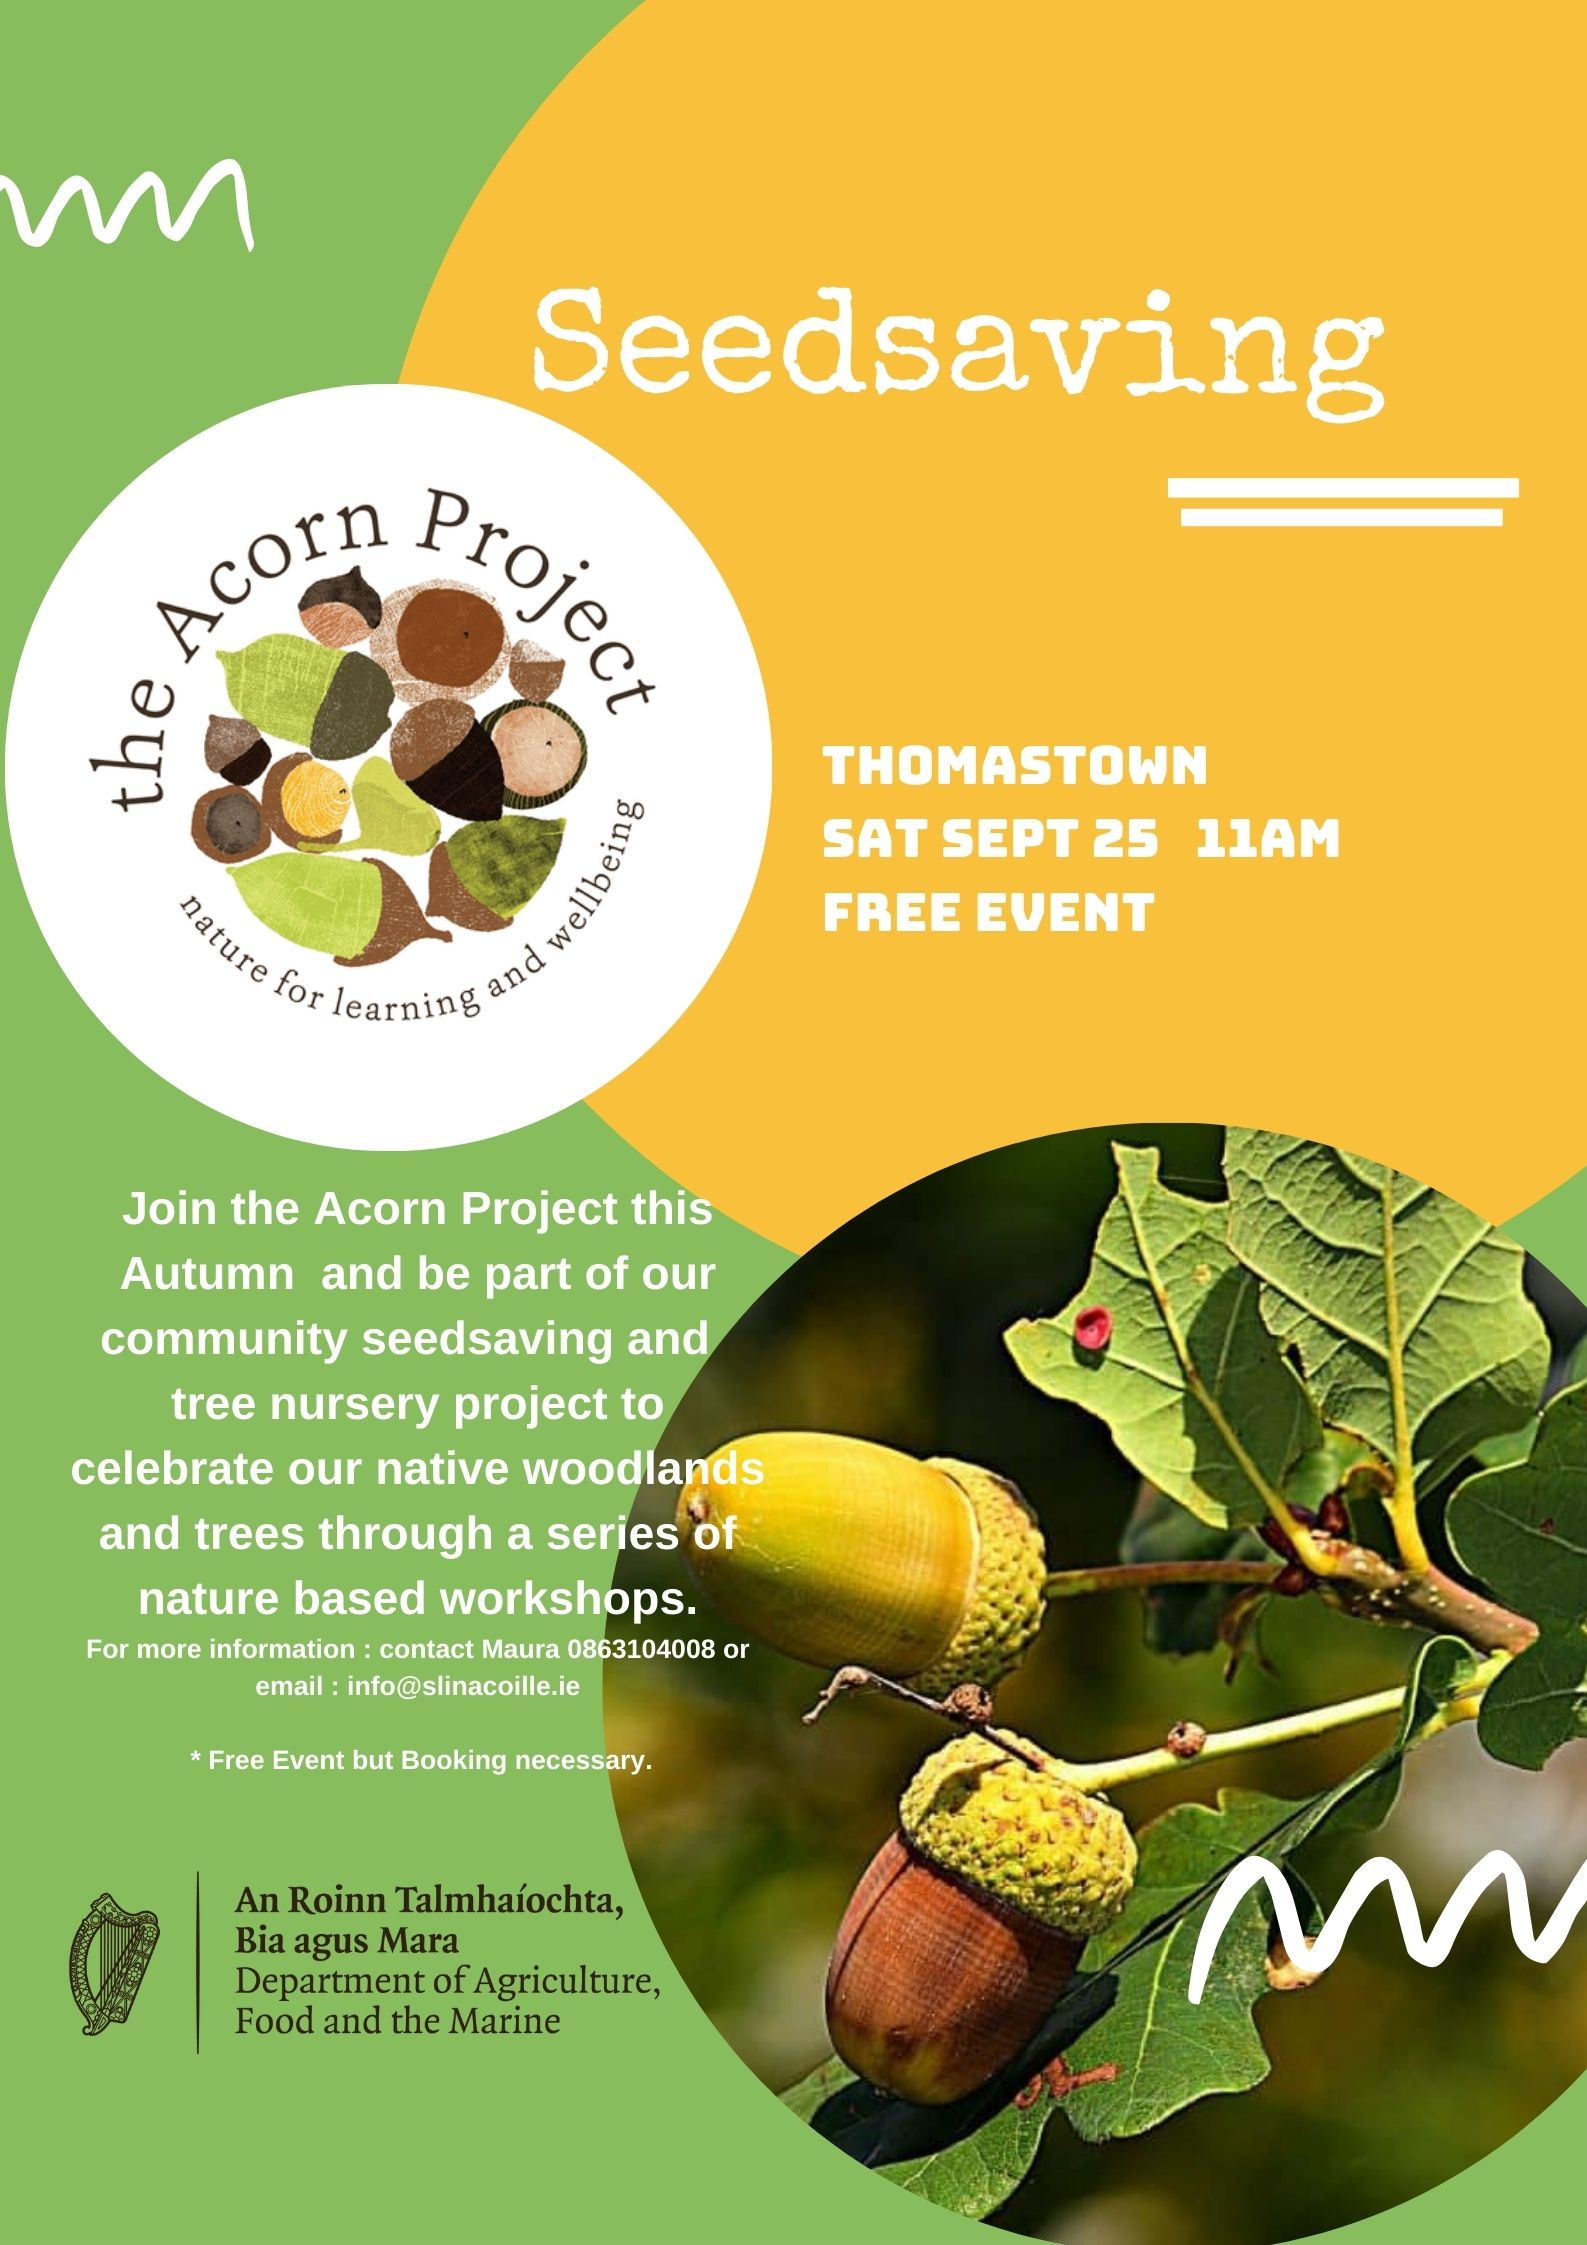 Thomastown Seedsaving